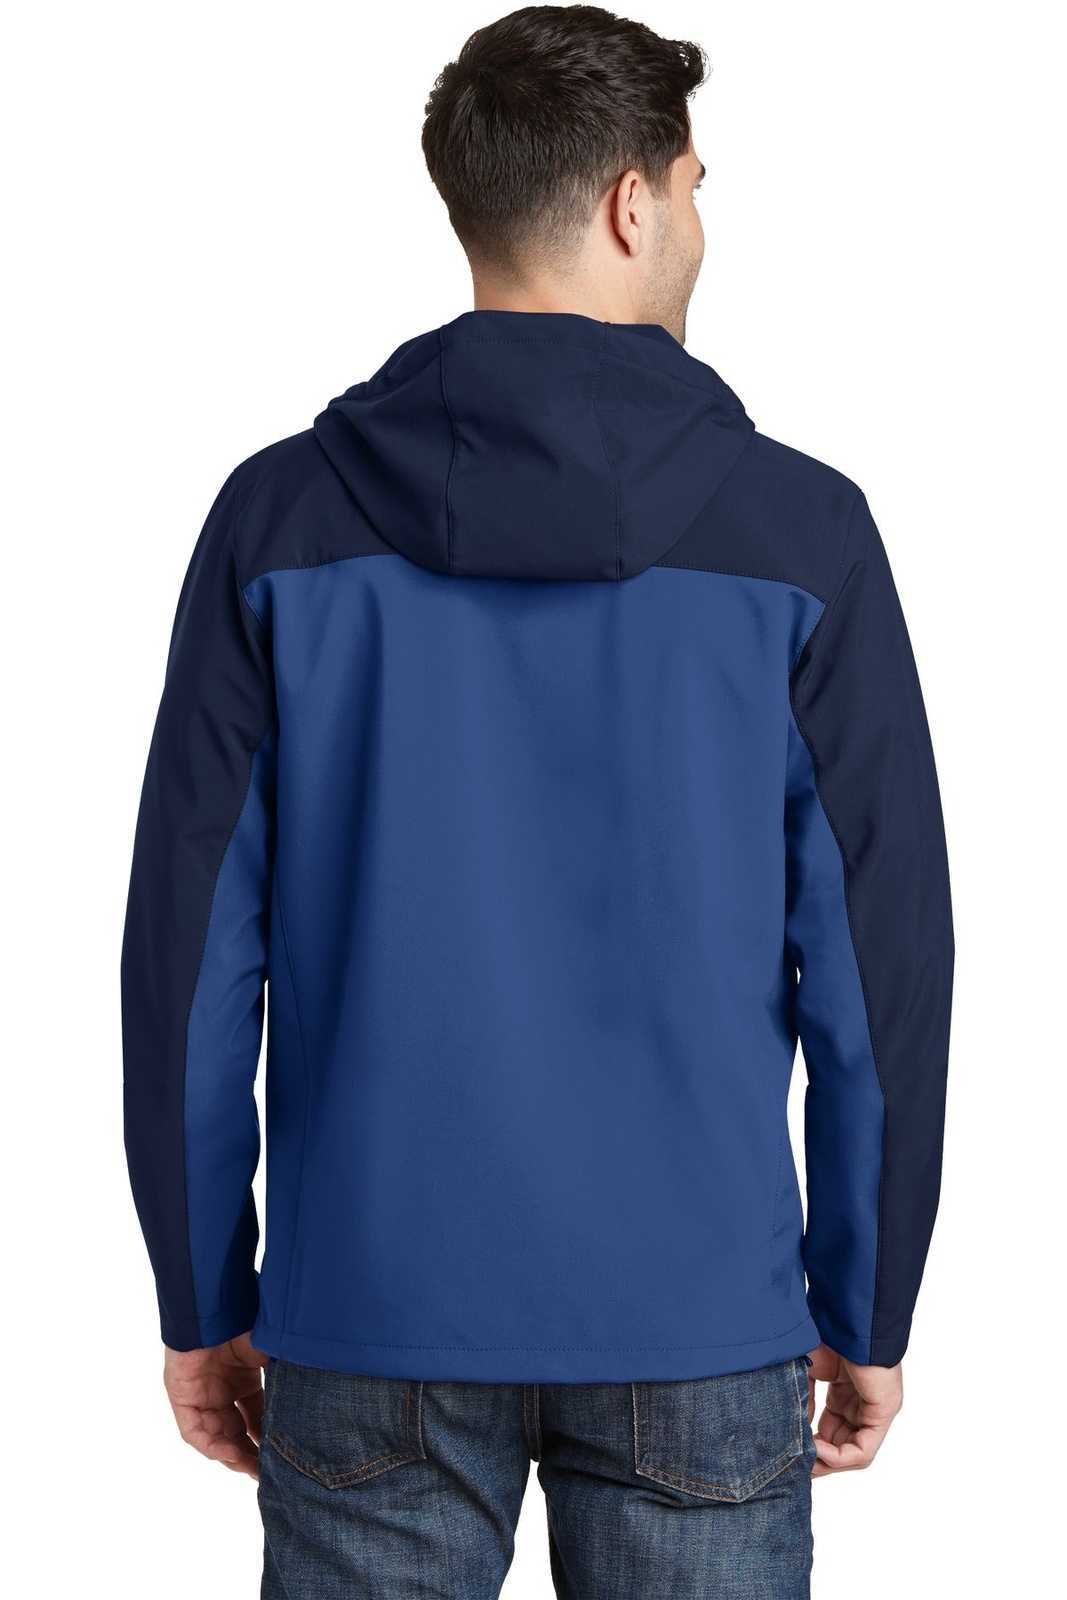 Port Authority J335 Hooded Core Soft Shell Jacket - Night Sky Blue Dress Blue Navy - HIT a Double - 1